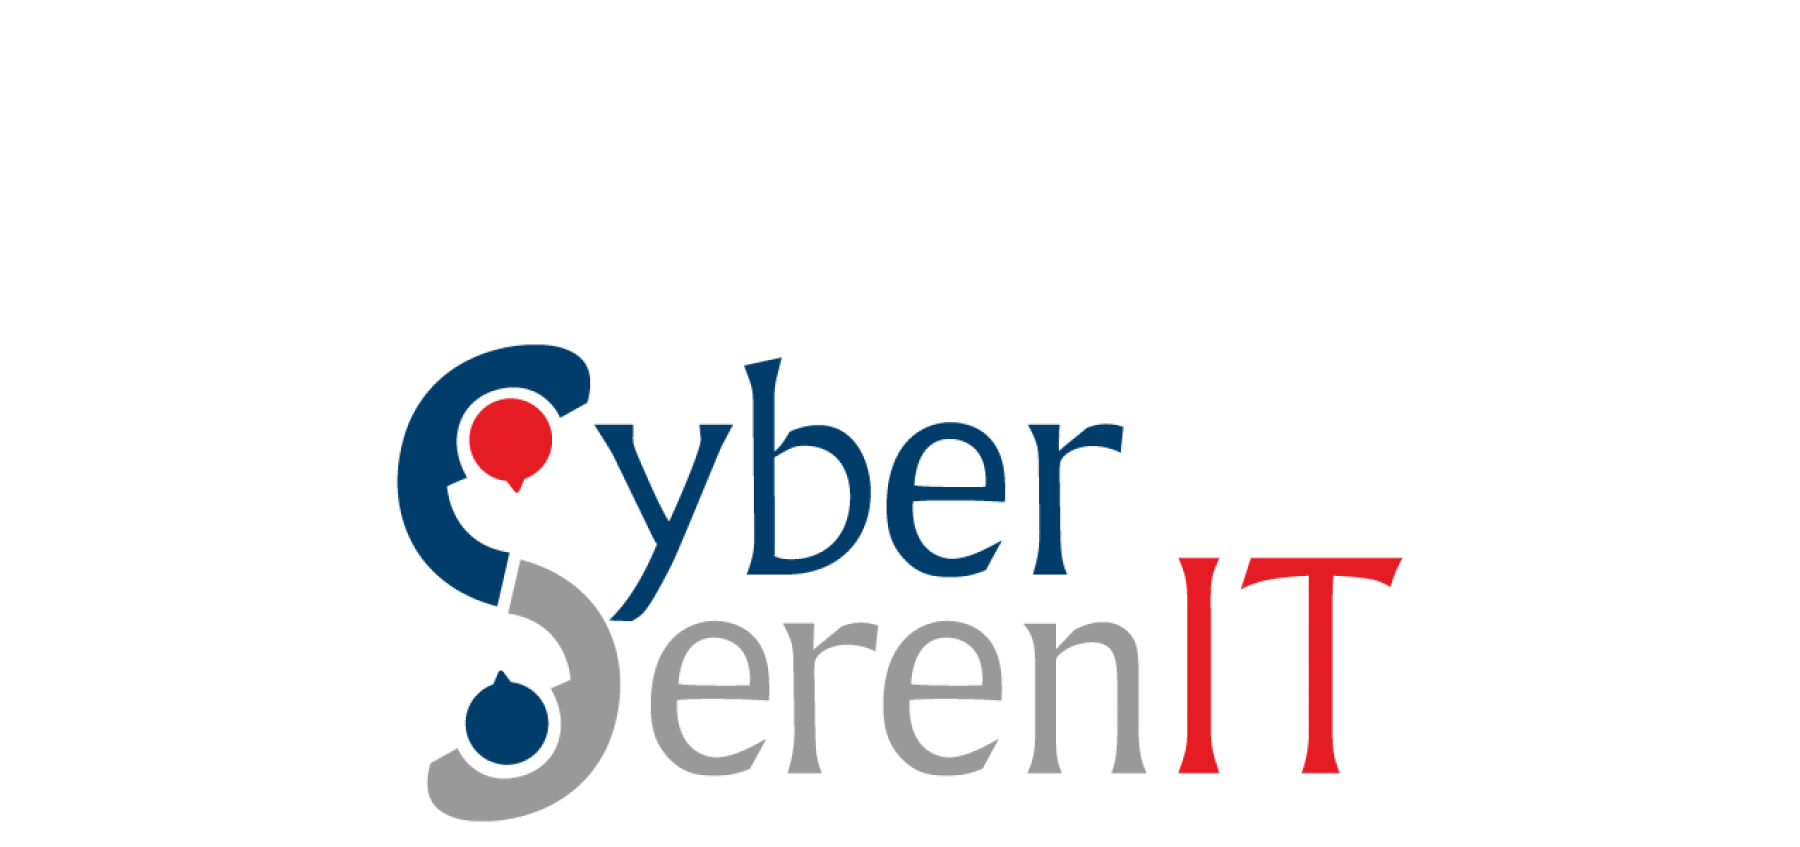 CyberSerenIT